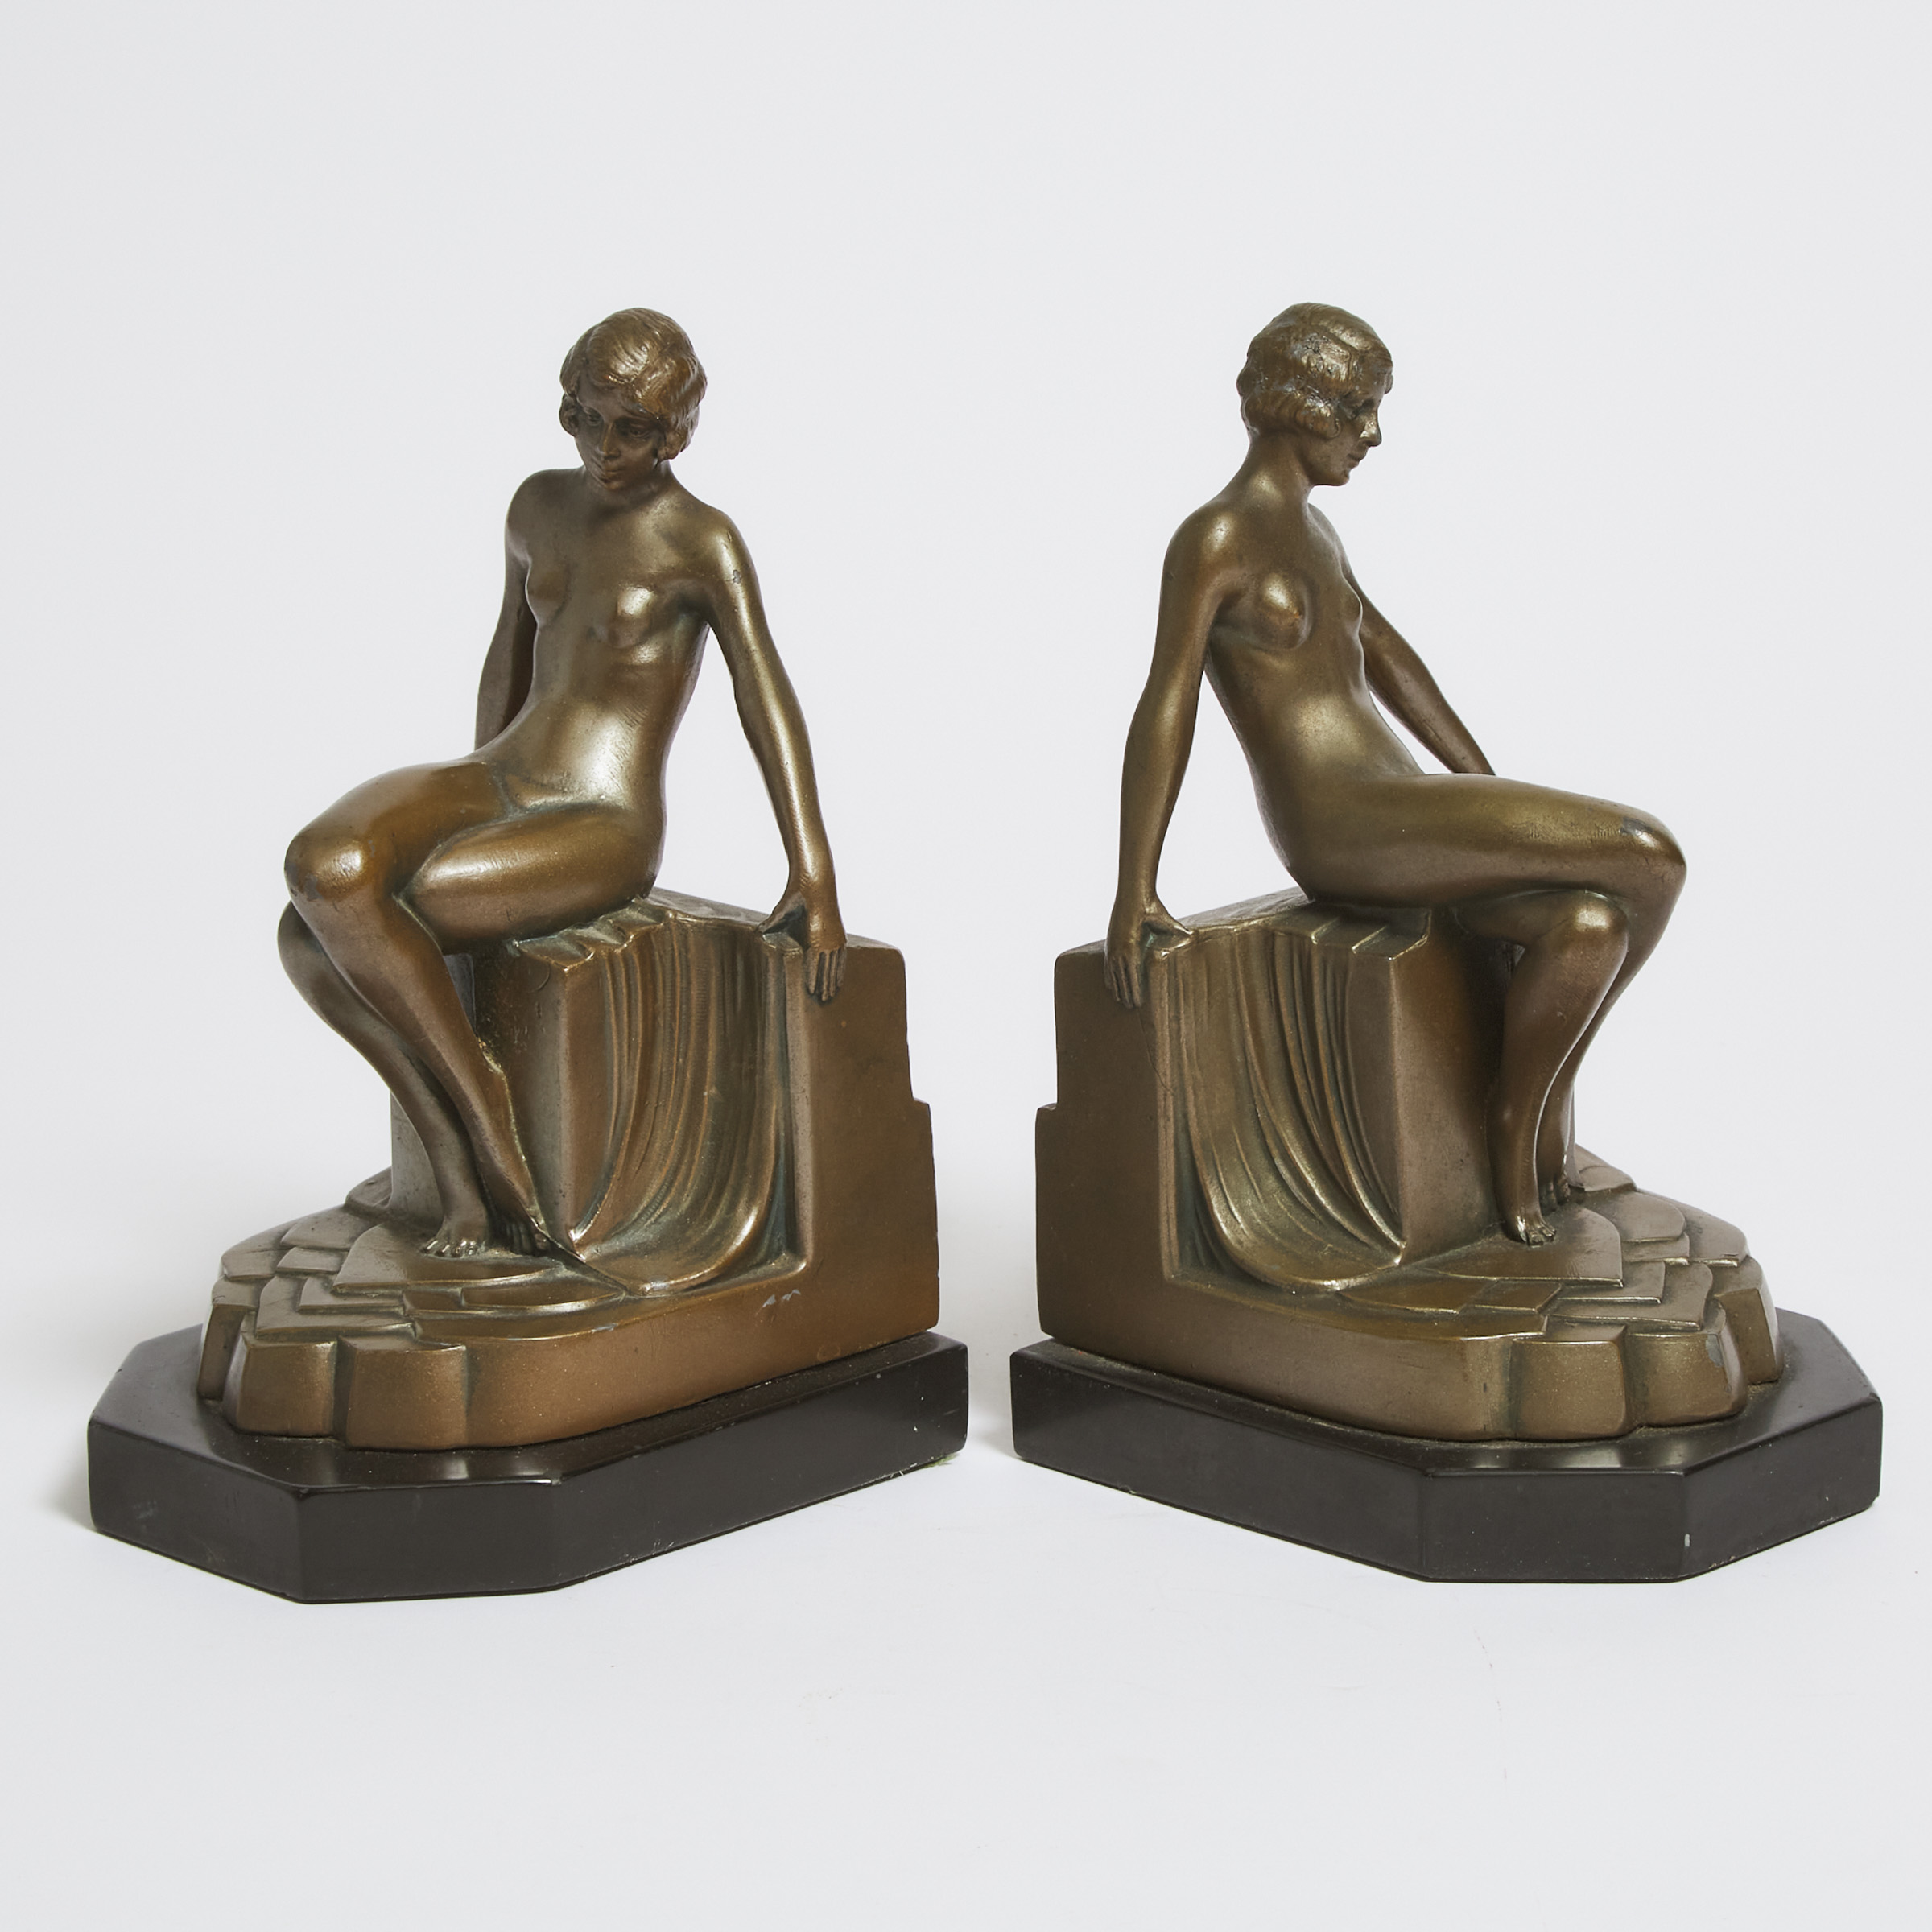 Pair of American School Art Deco Figural Bookends, c.1925